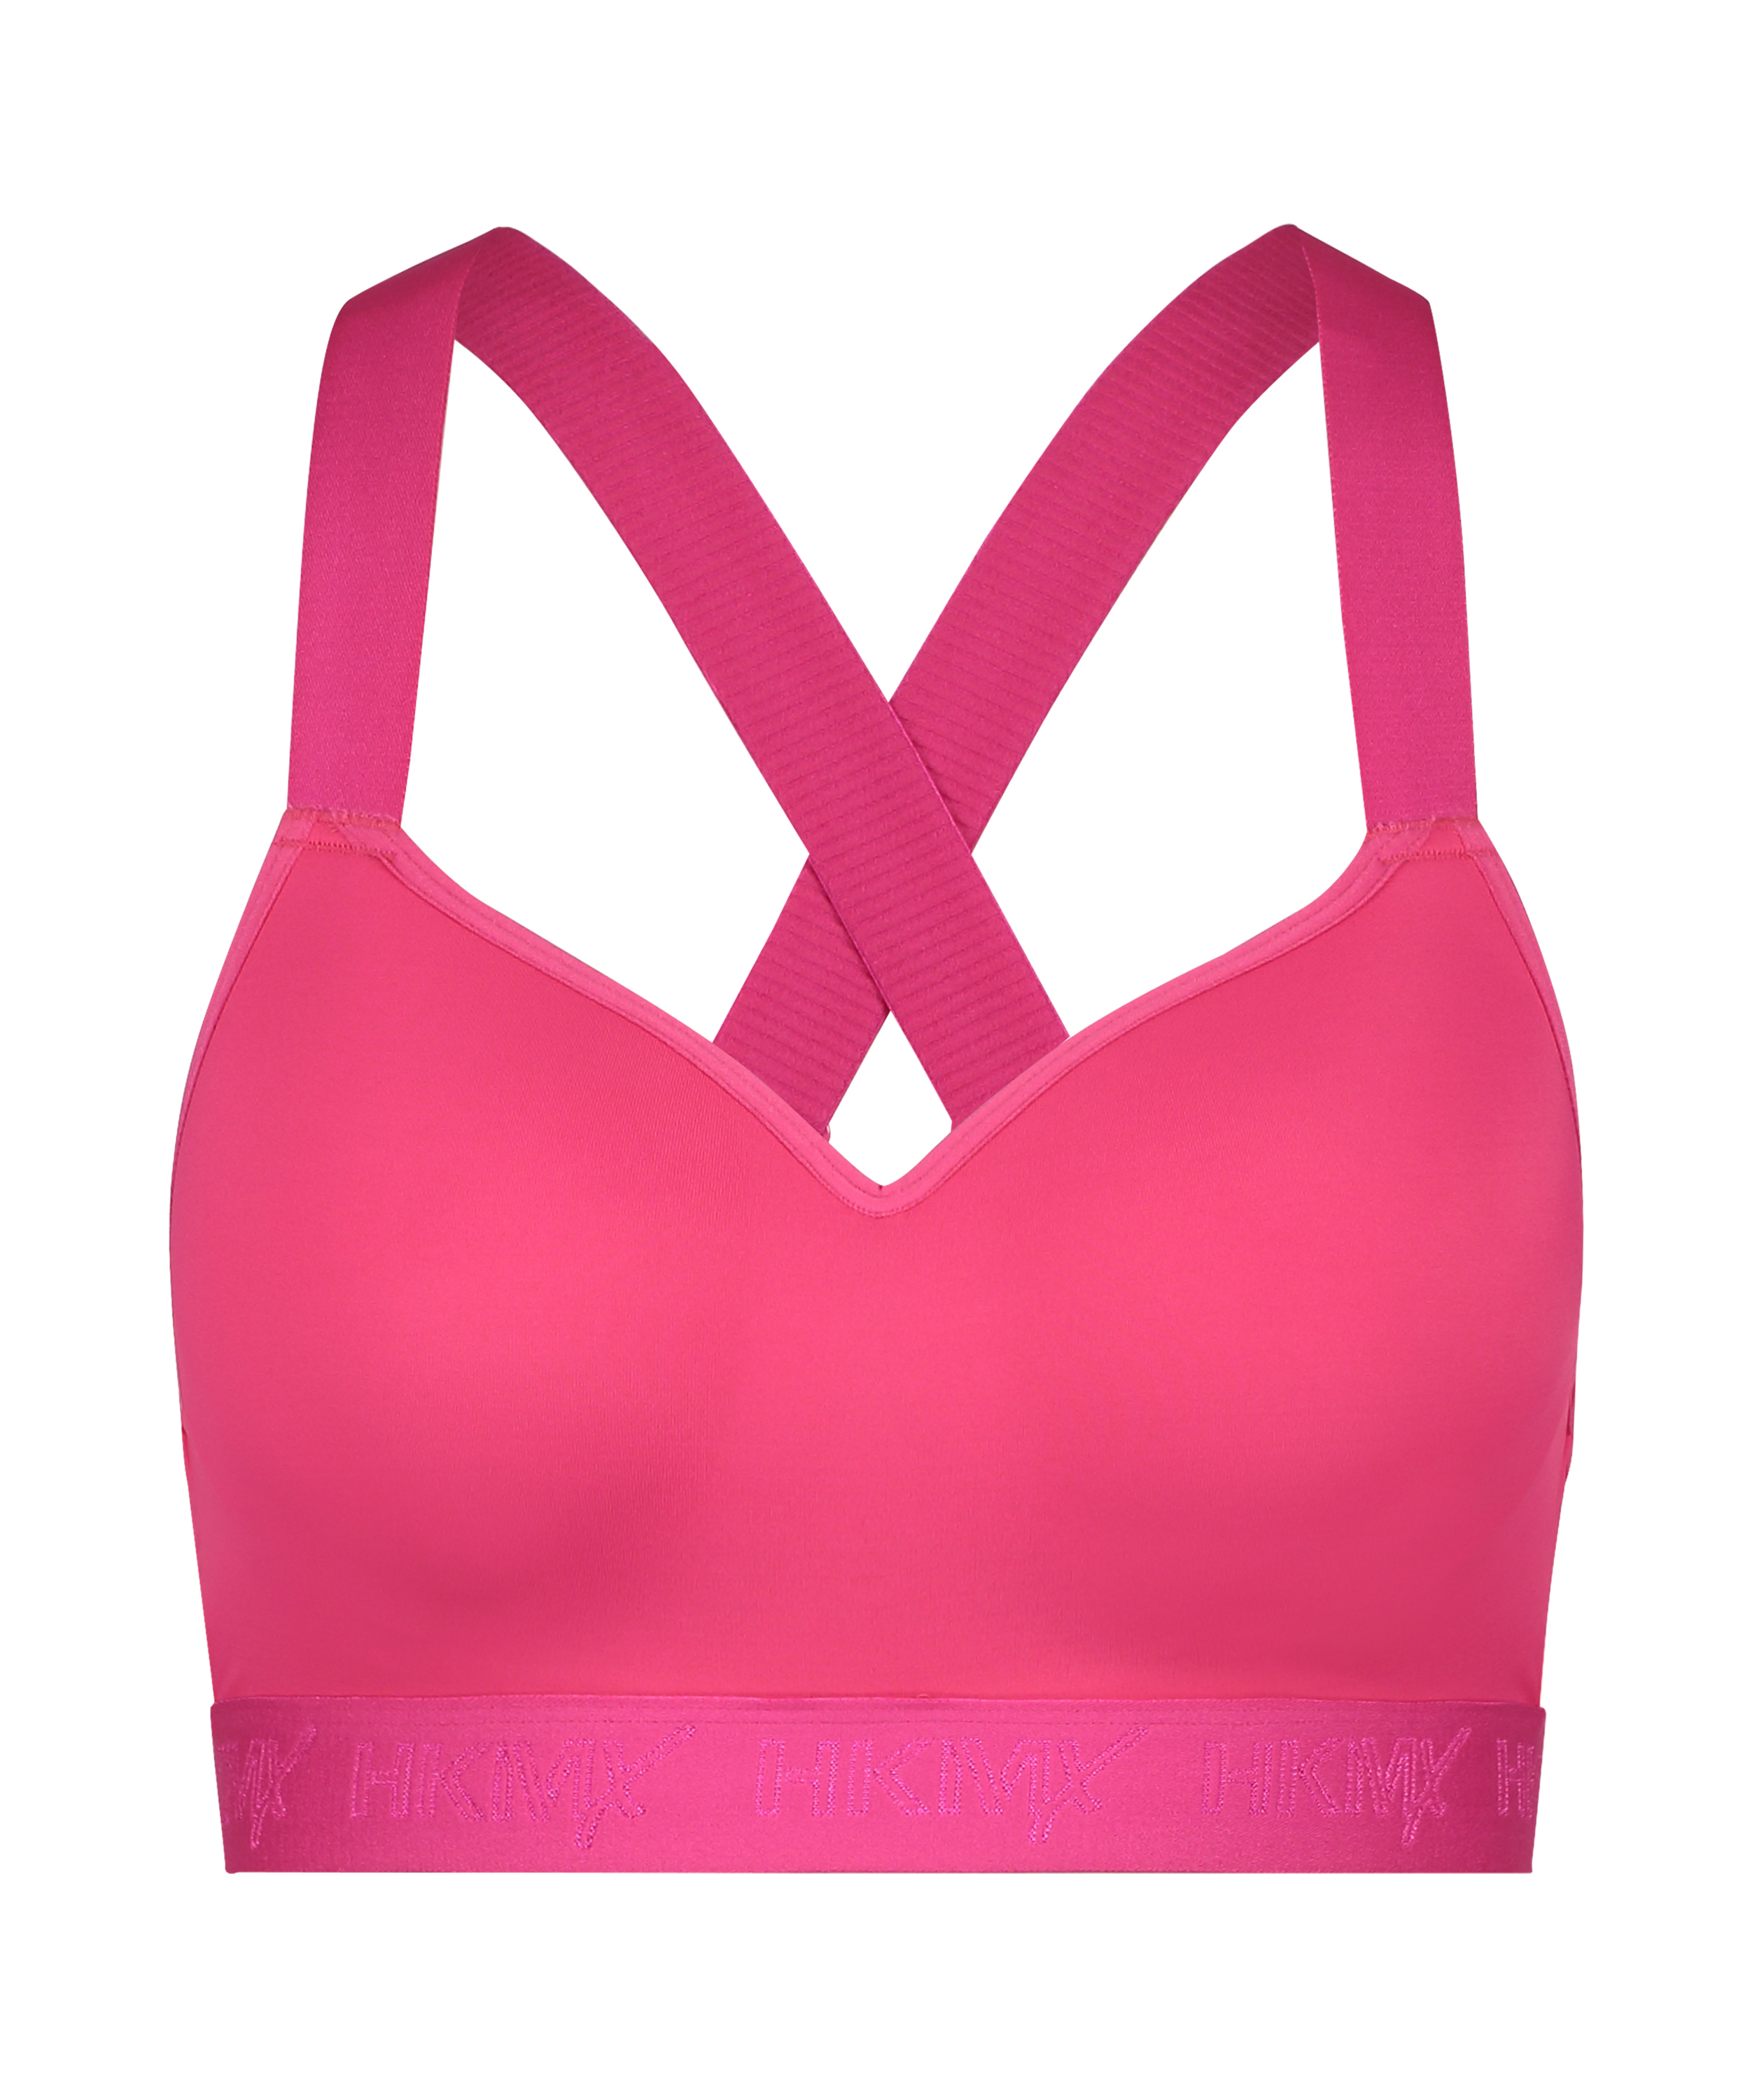 HKMX Sports bra The All Star Level 2, Pink, main